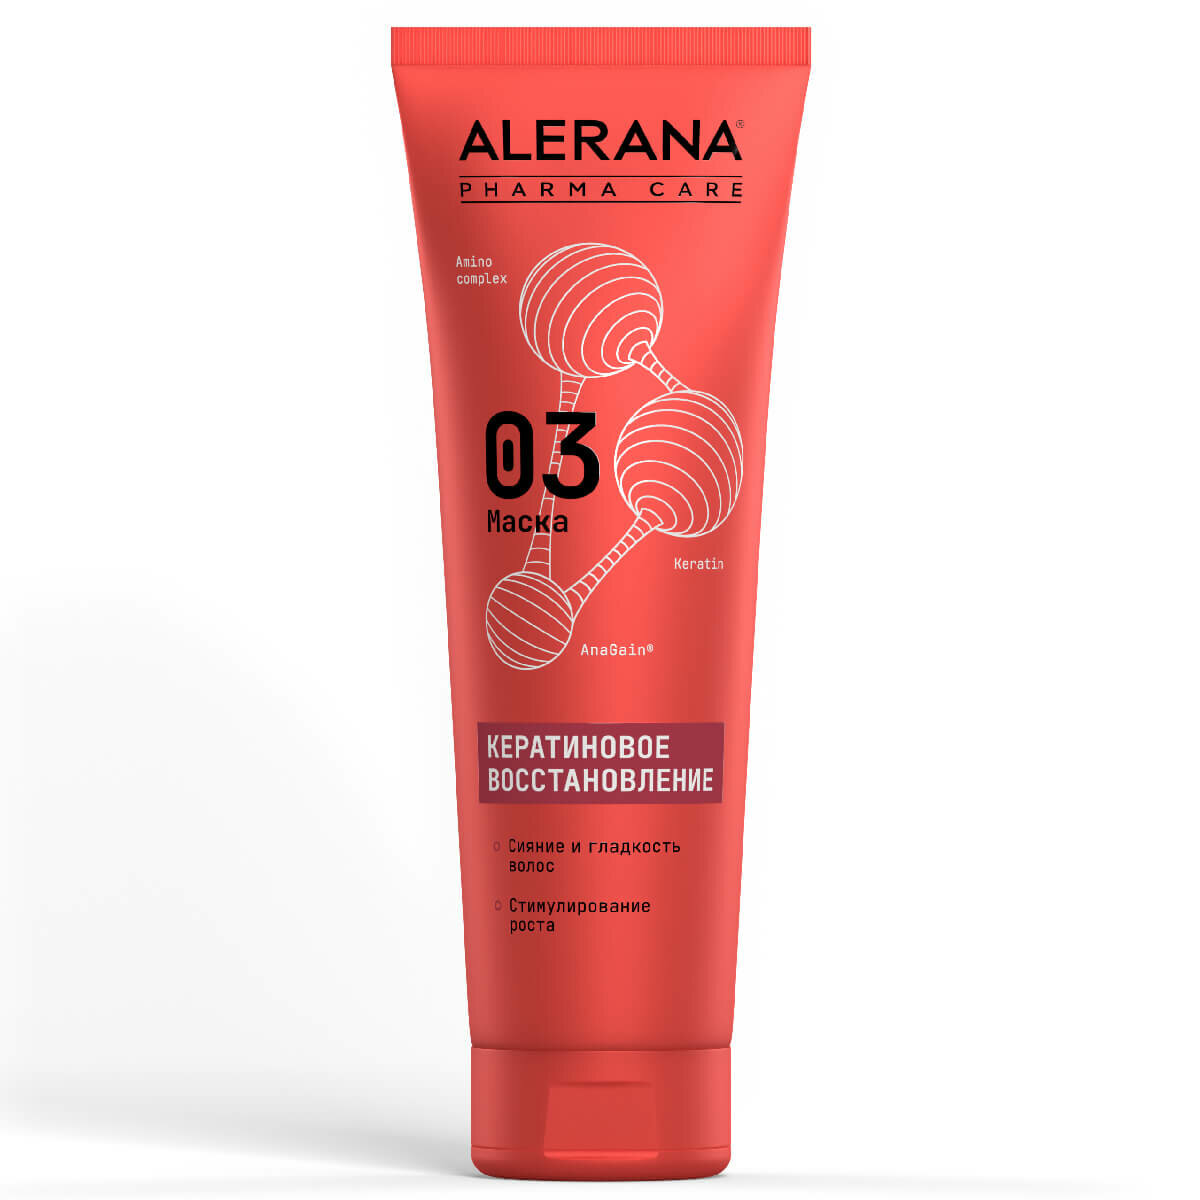 Alerana Pharma Care Маска для волос Формула кератинового восстановления Pharma Care,260МЛ, Alerana